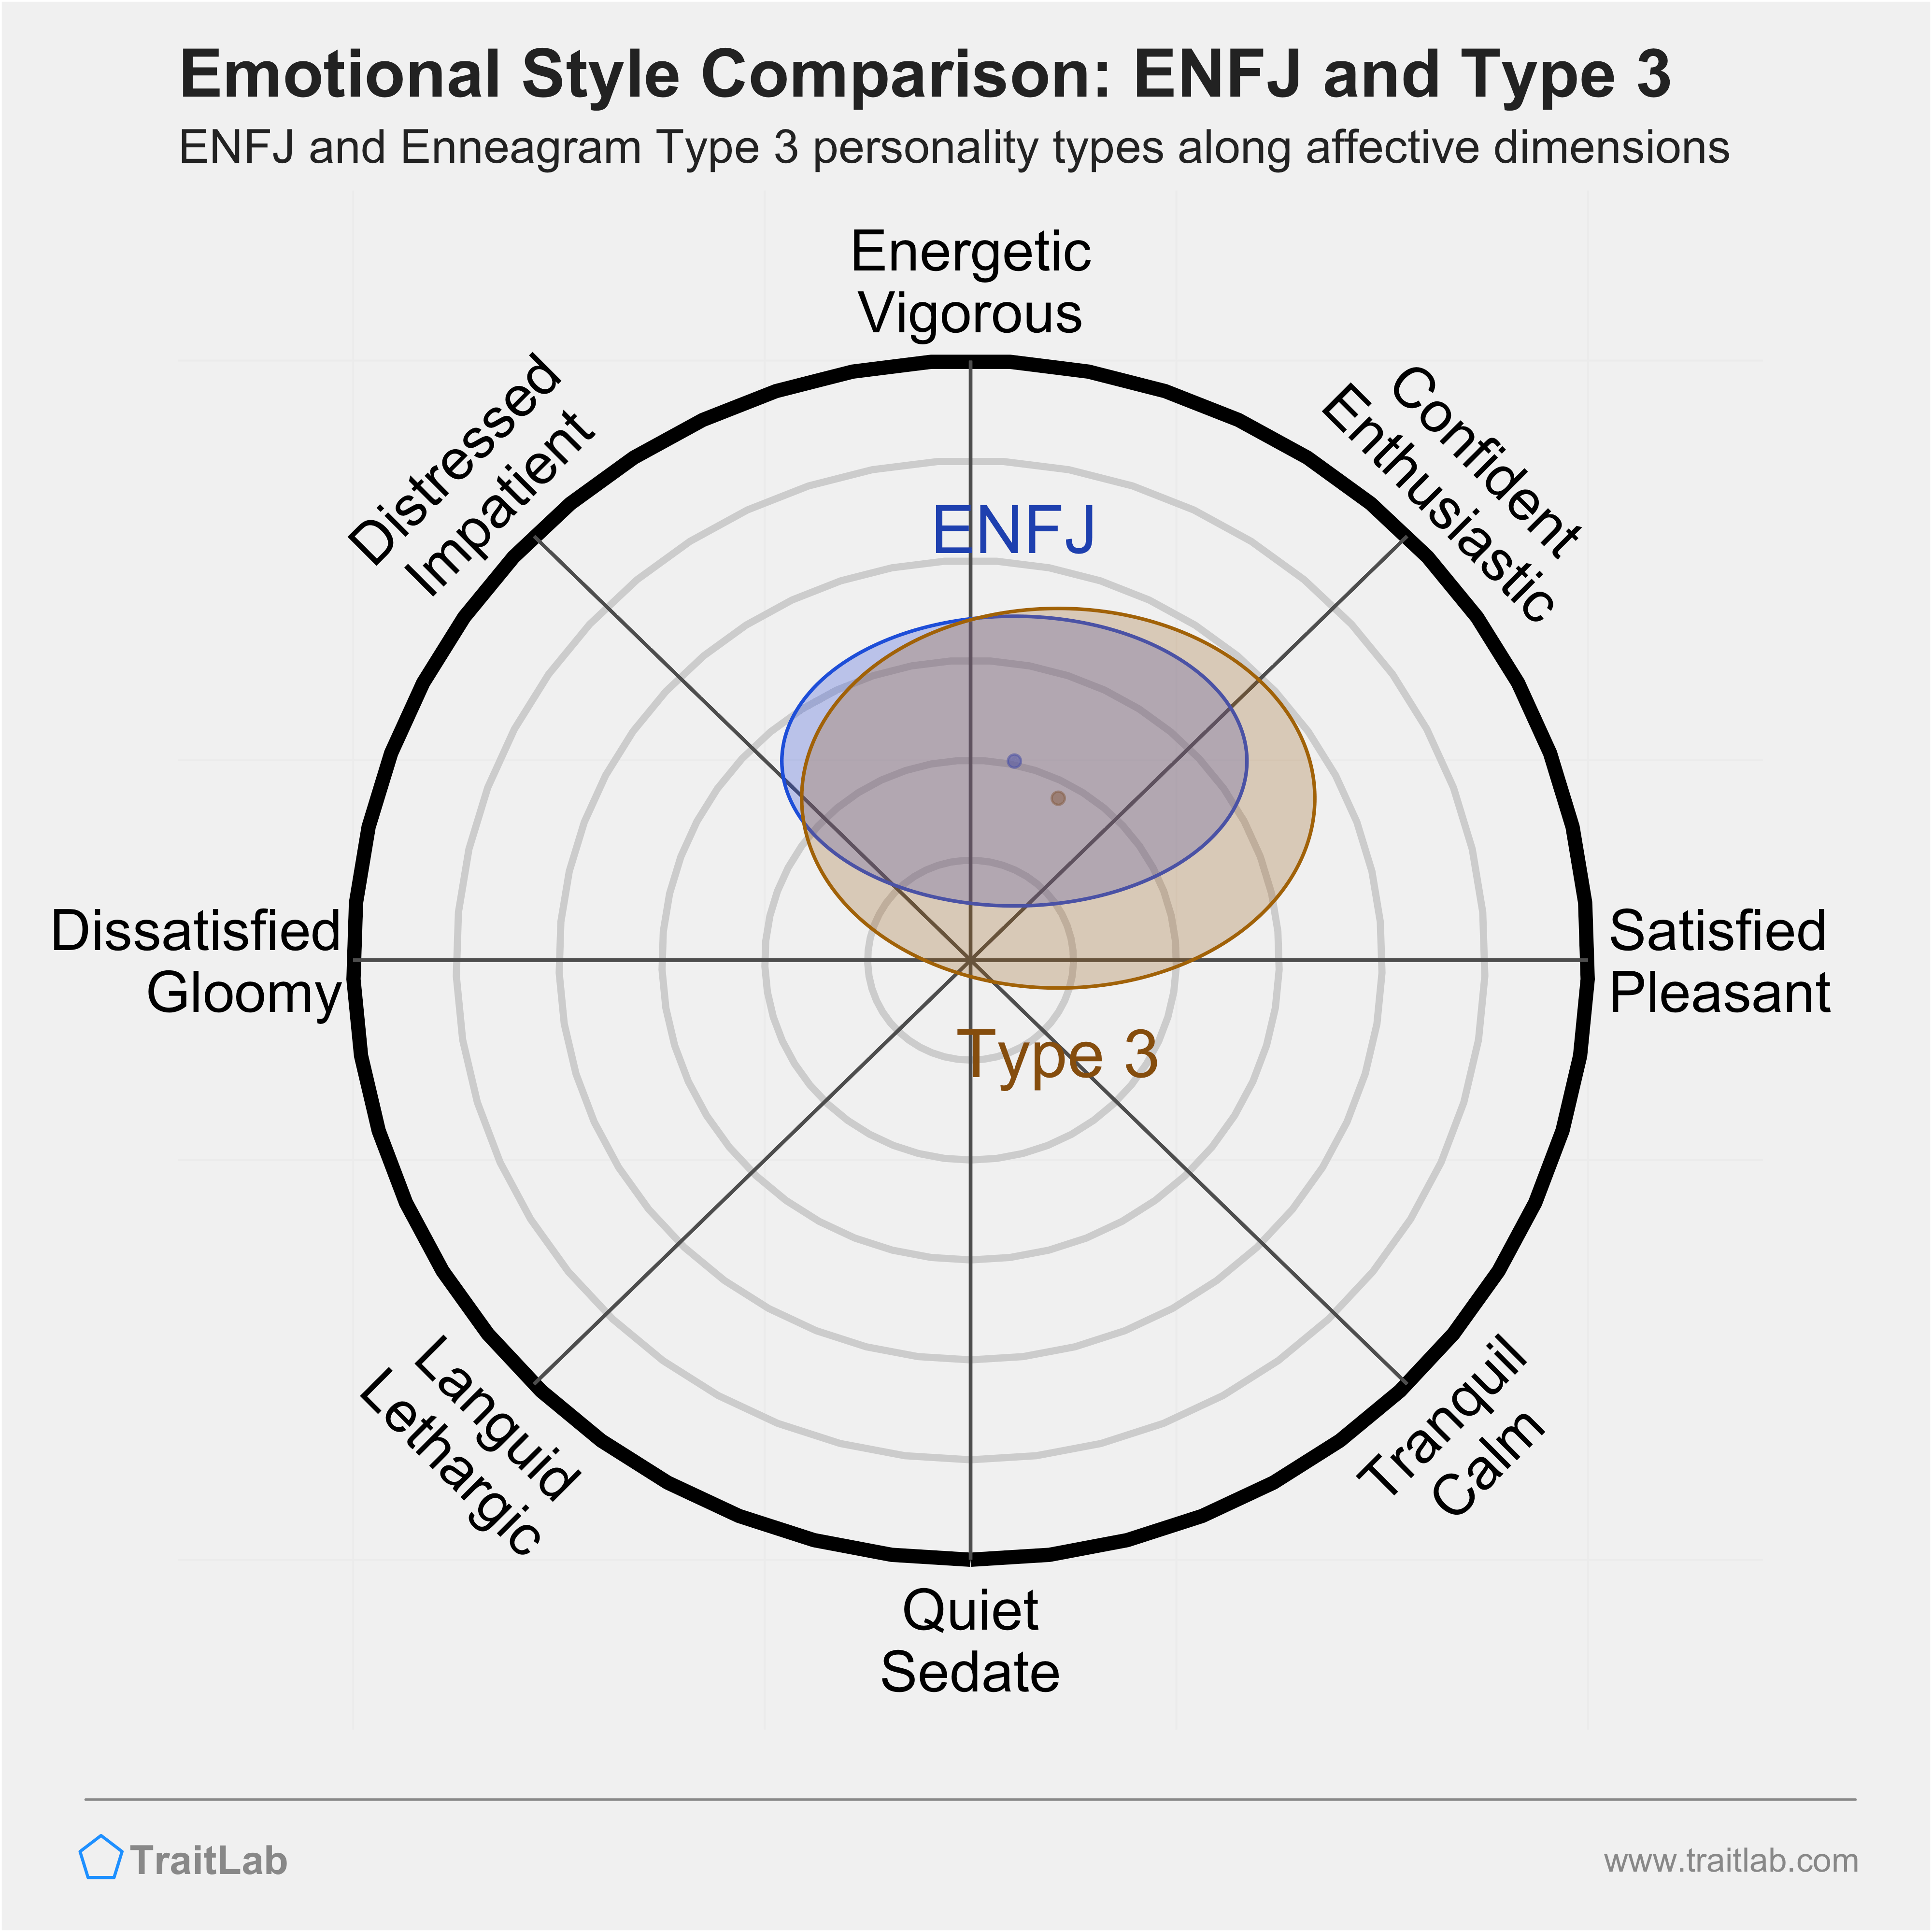 ENFJ and Type 3 comparison across emotional (affective) dimensions